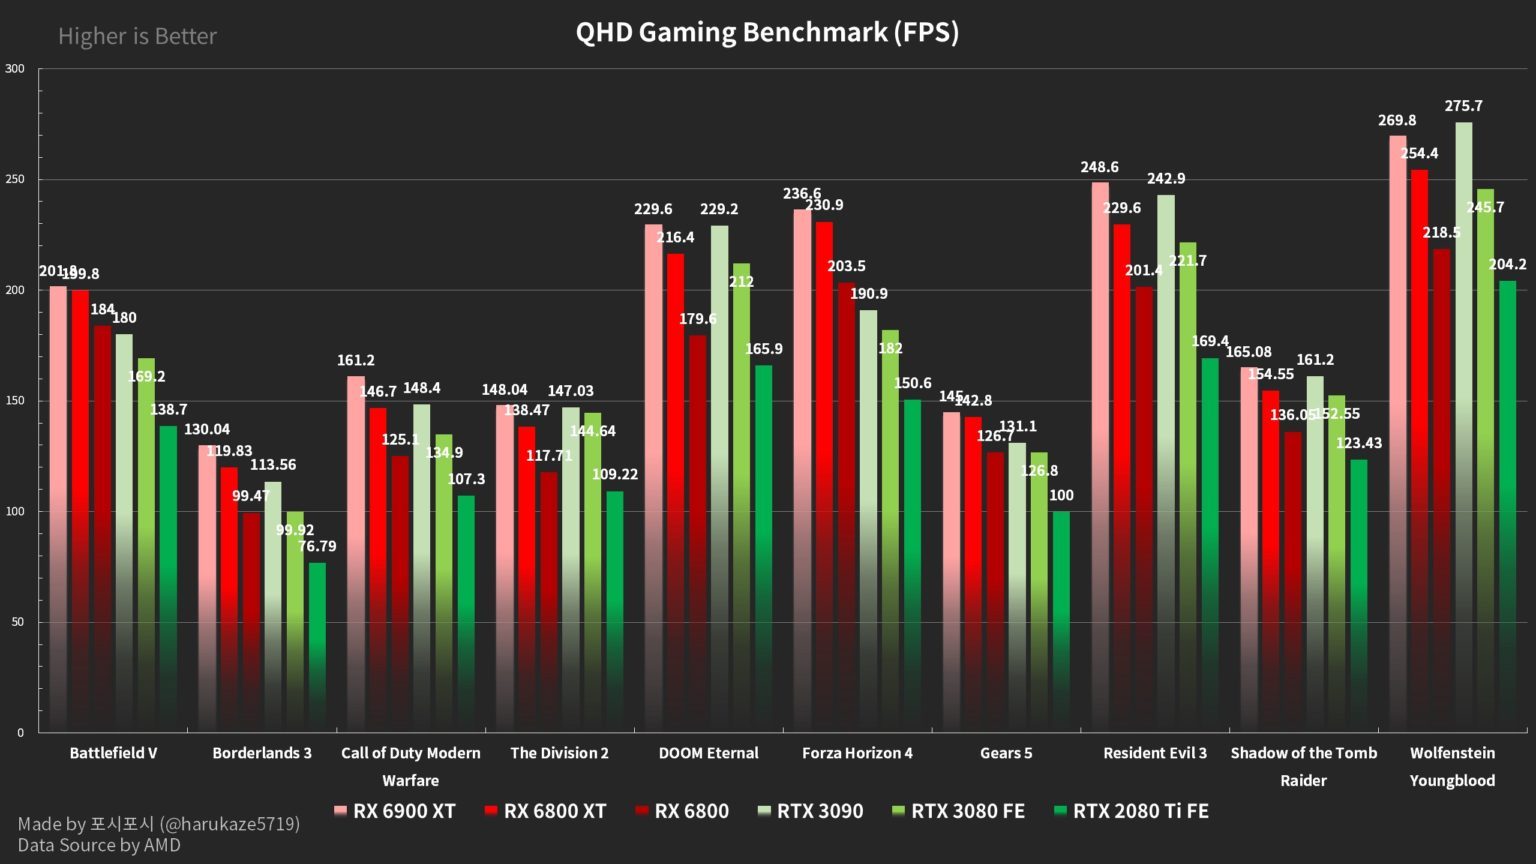 Nvidia Graphics Cards Comparison Chart Nvidia Geforce Rtx 30 Series